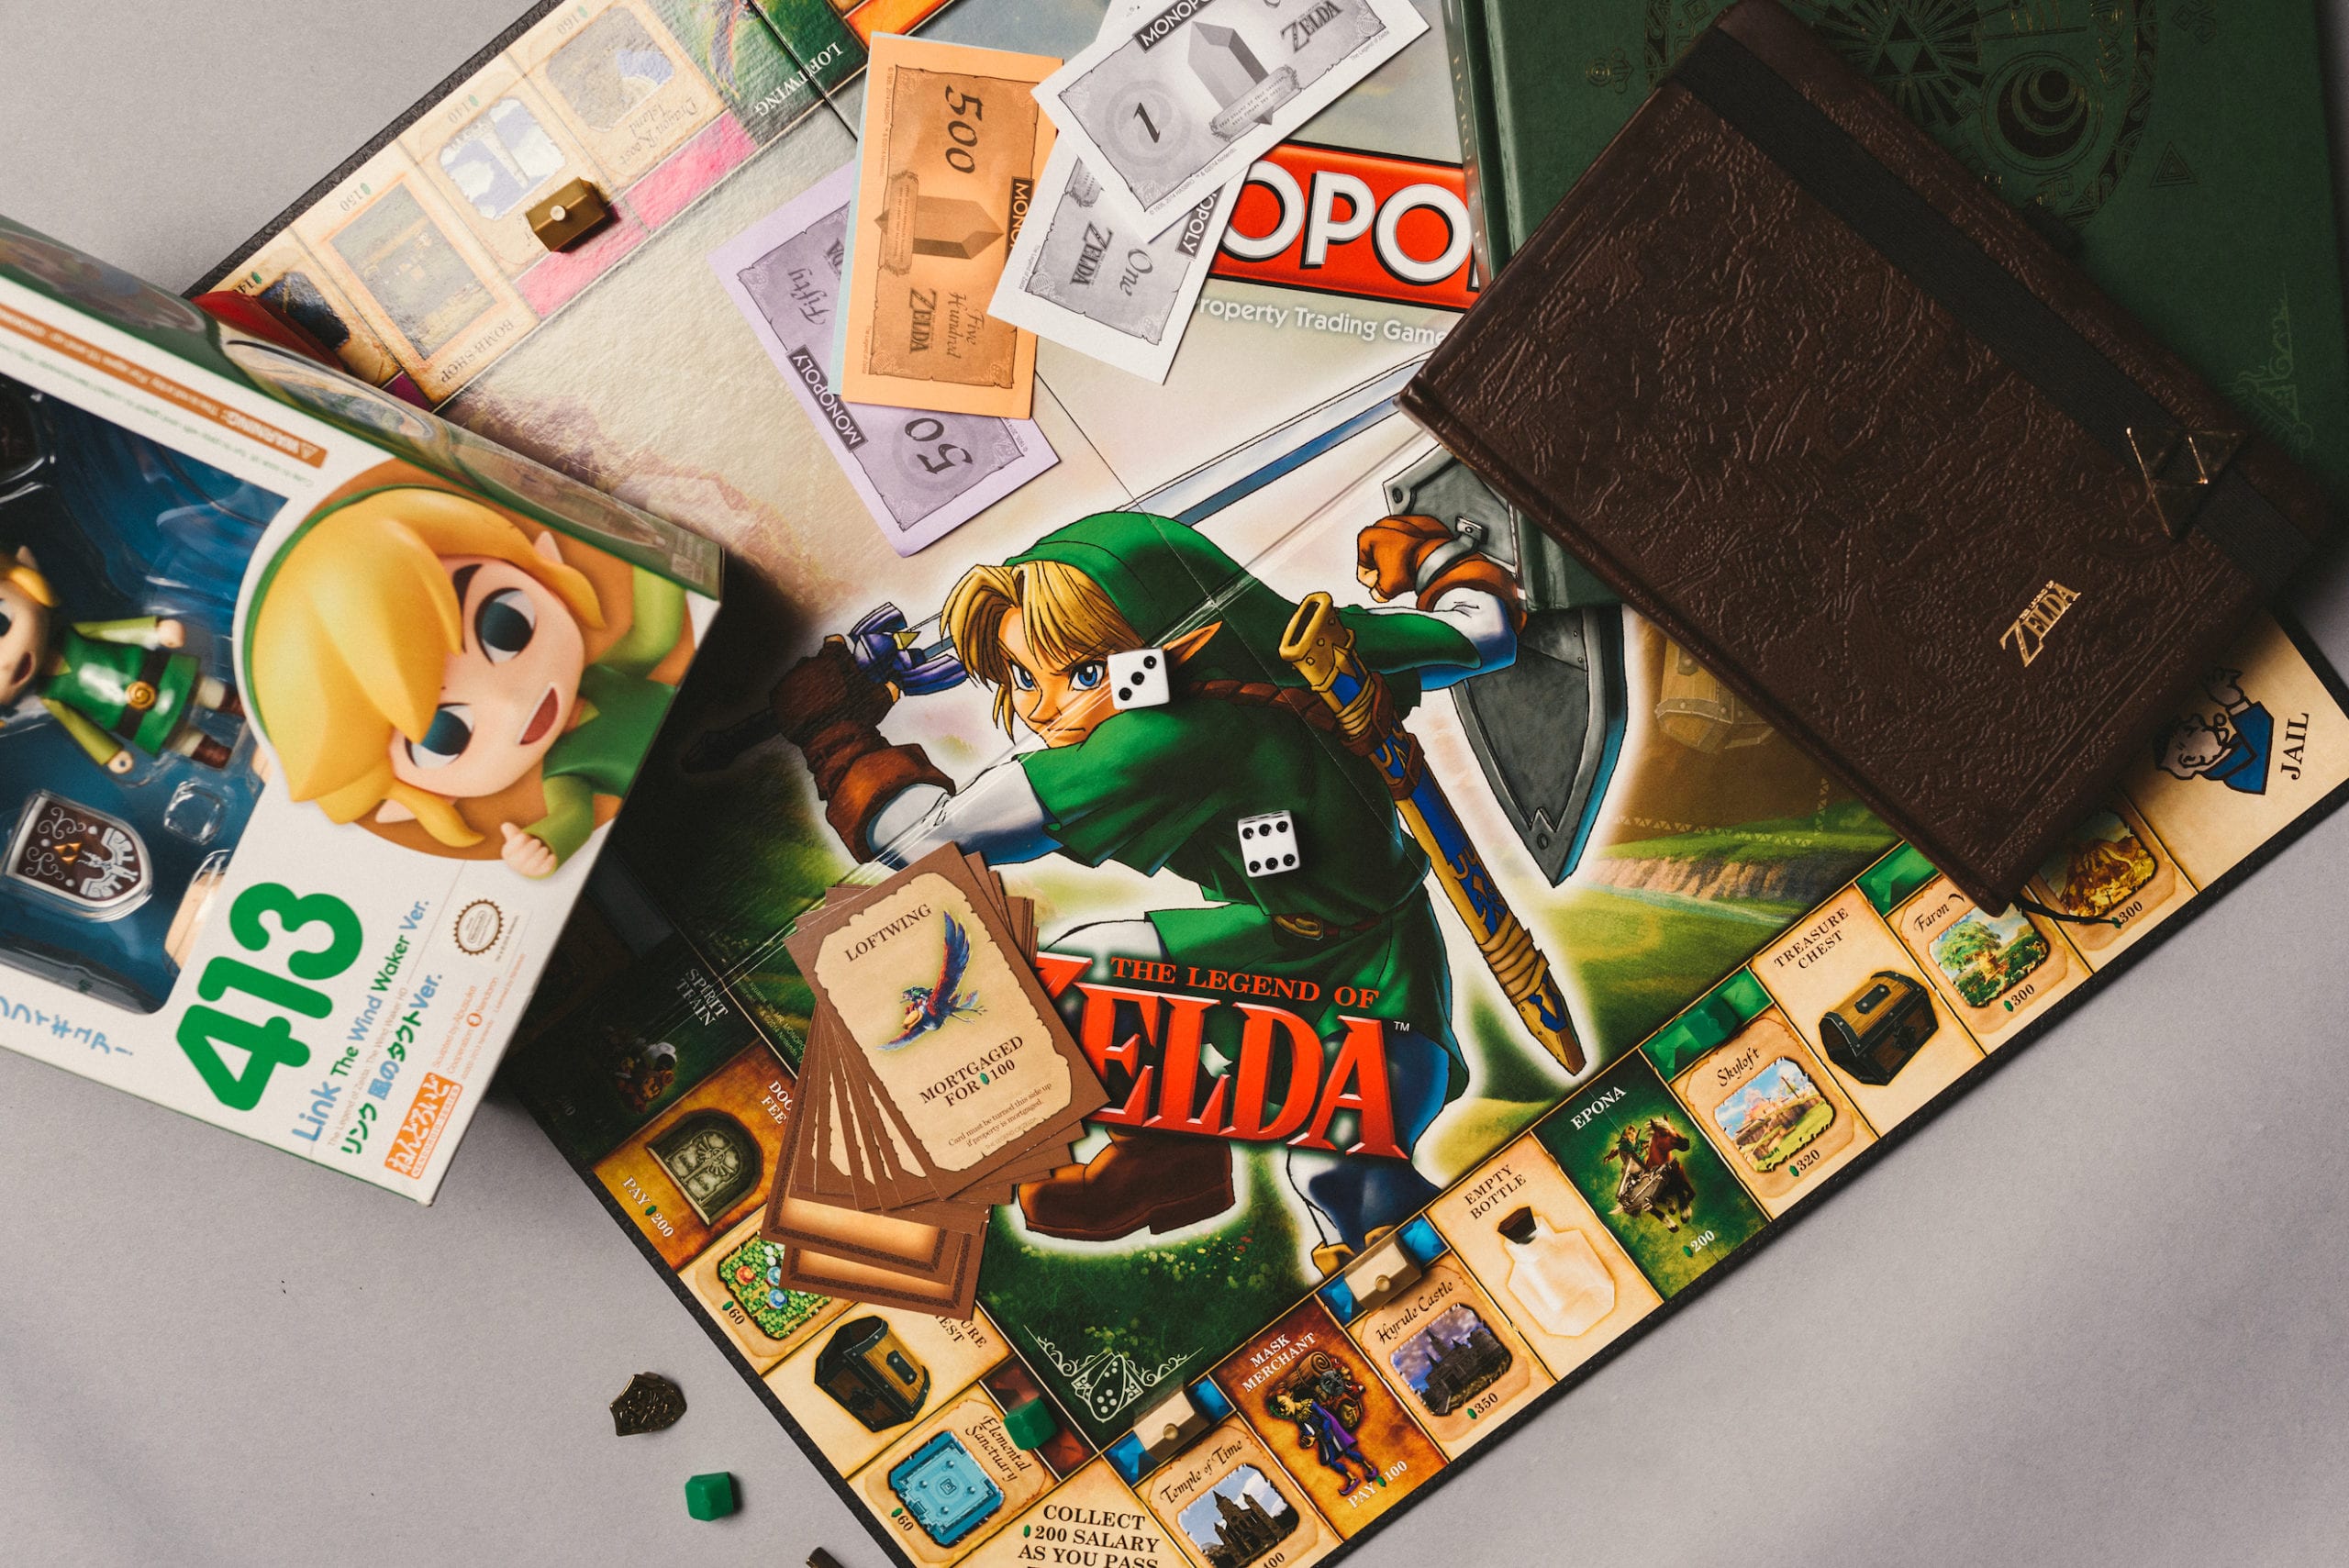 IU C&I Studios Portfolio Heart Piece Media Day Zelda and Monopoly board games on display with Zelda book